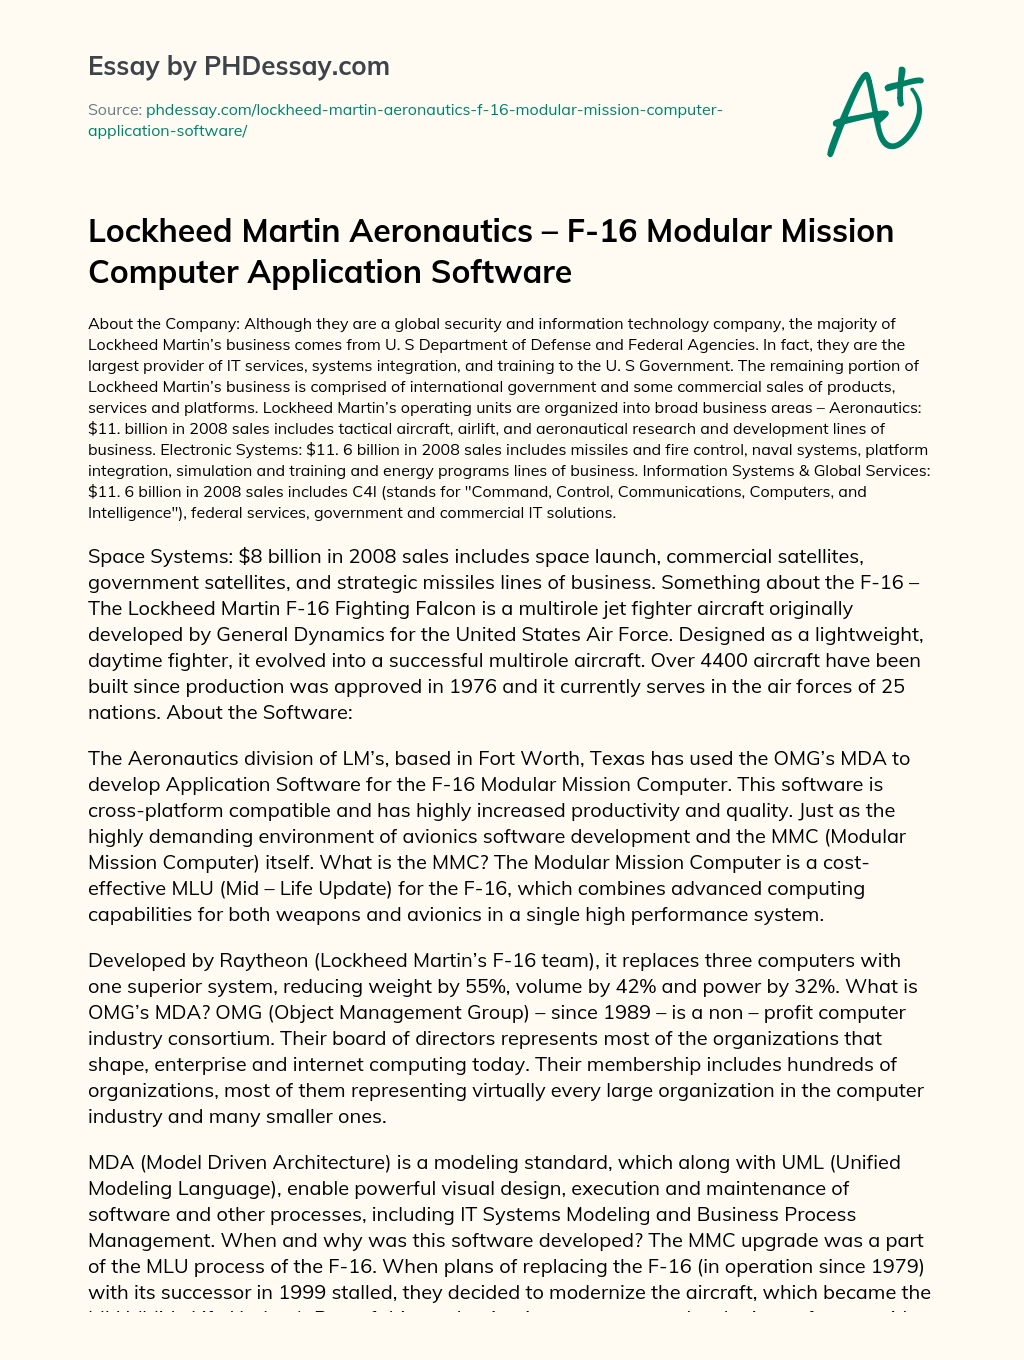 Lockheed Martin Aeronautics – F-16 Modular Mission Computer Application Software essay